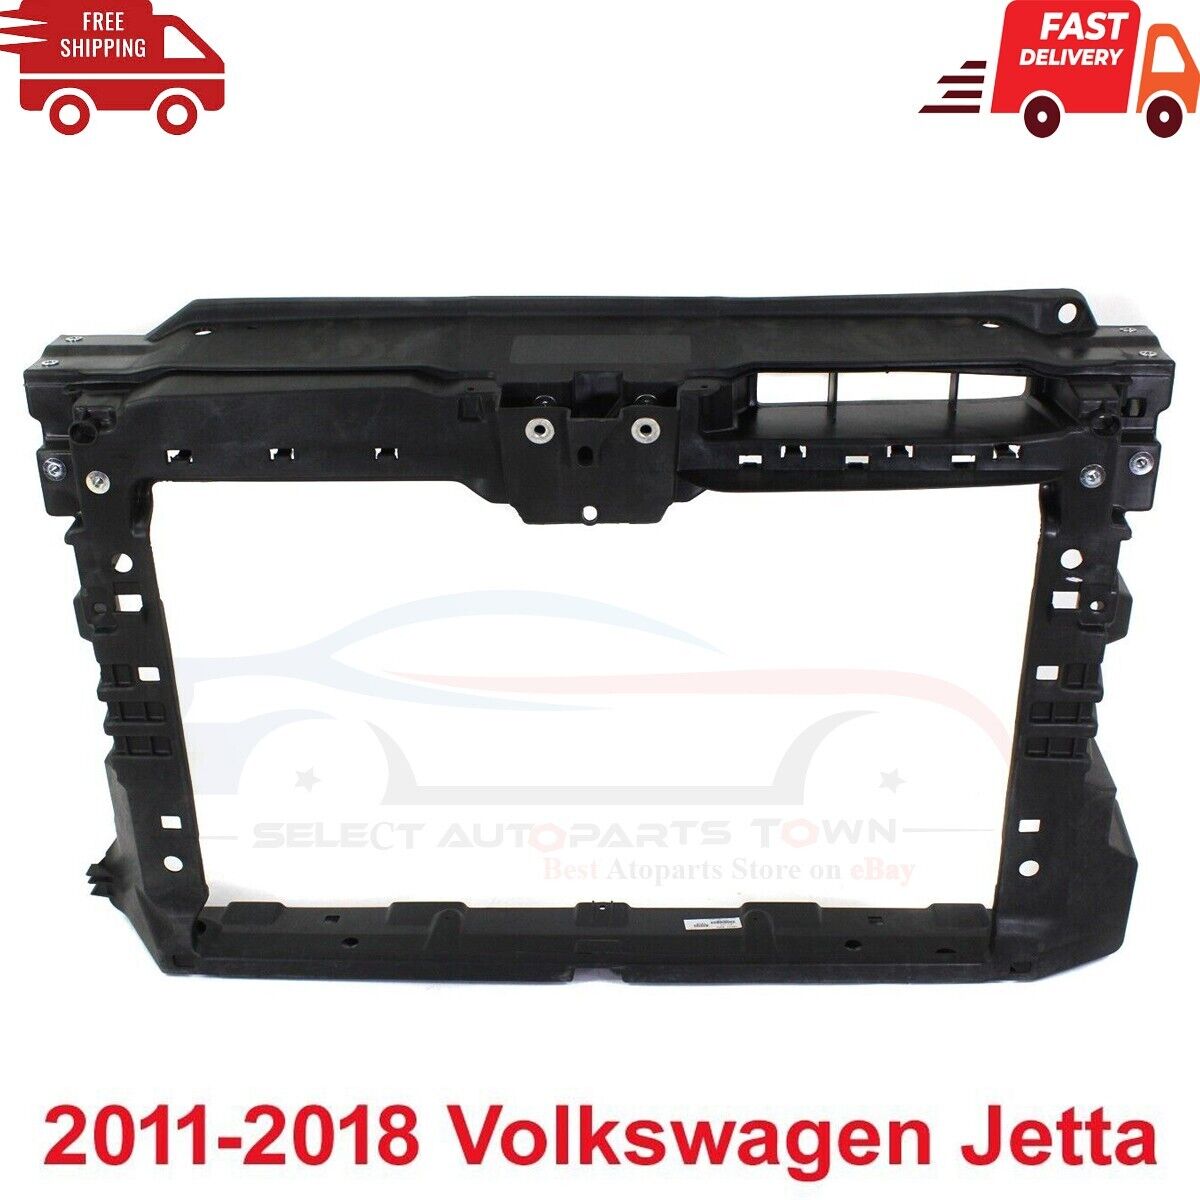 New Fits 2011-2018 Volkswagen Jetta Radiator Support Front Center Black Plastic